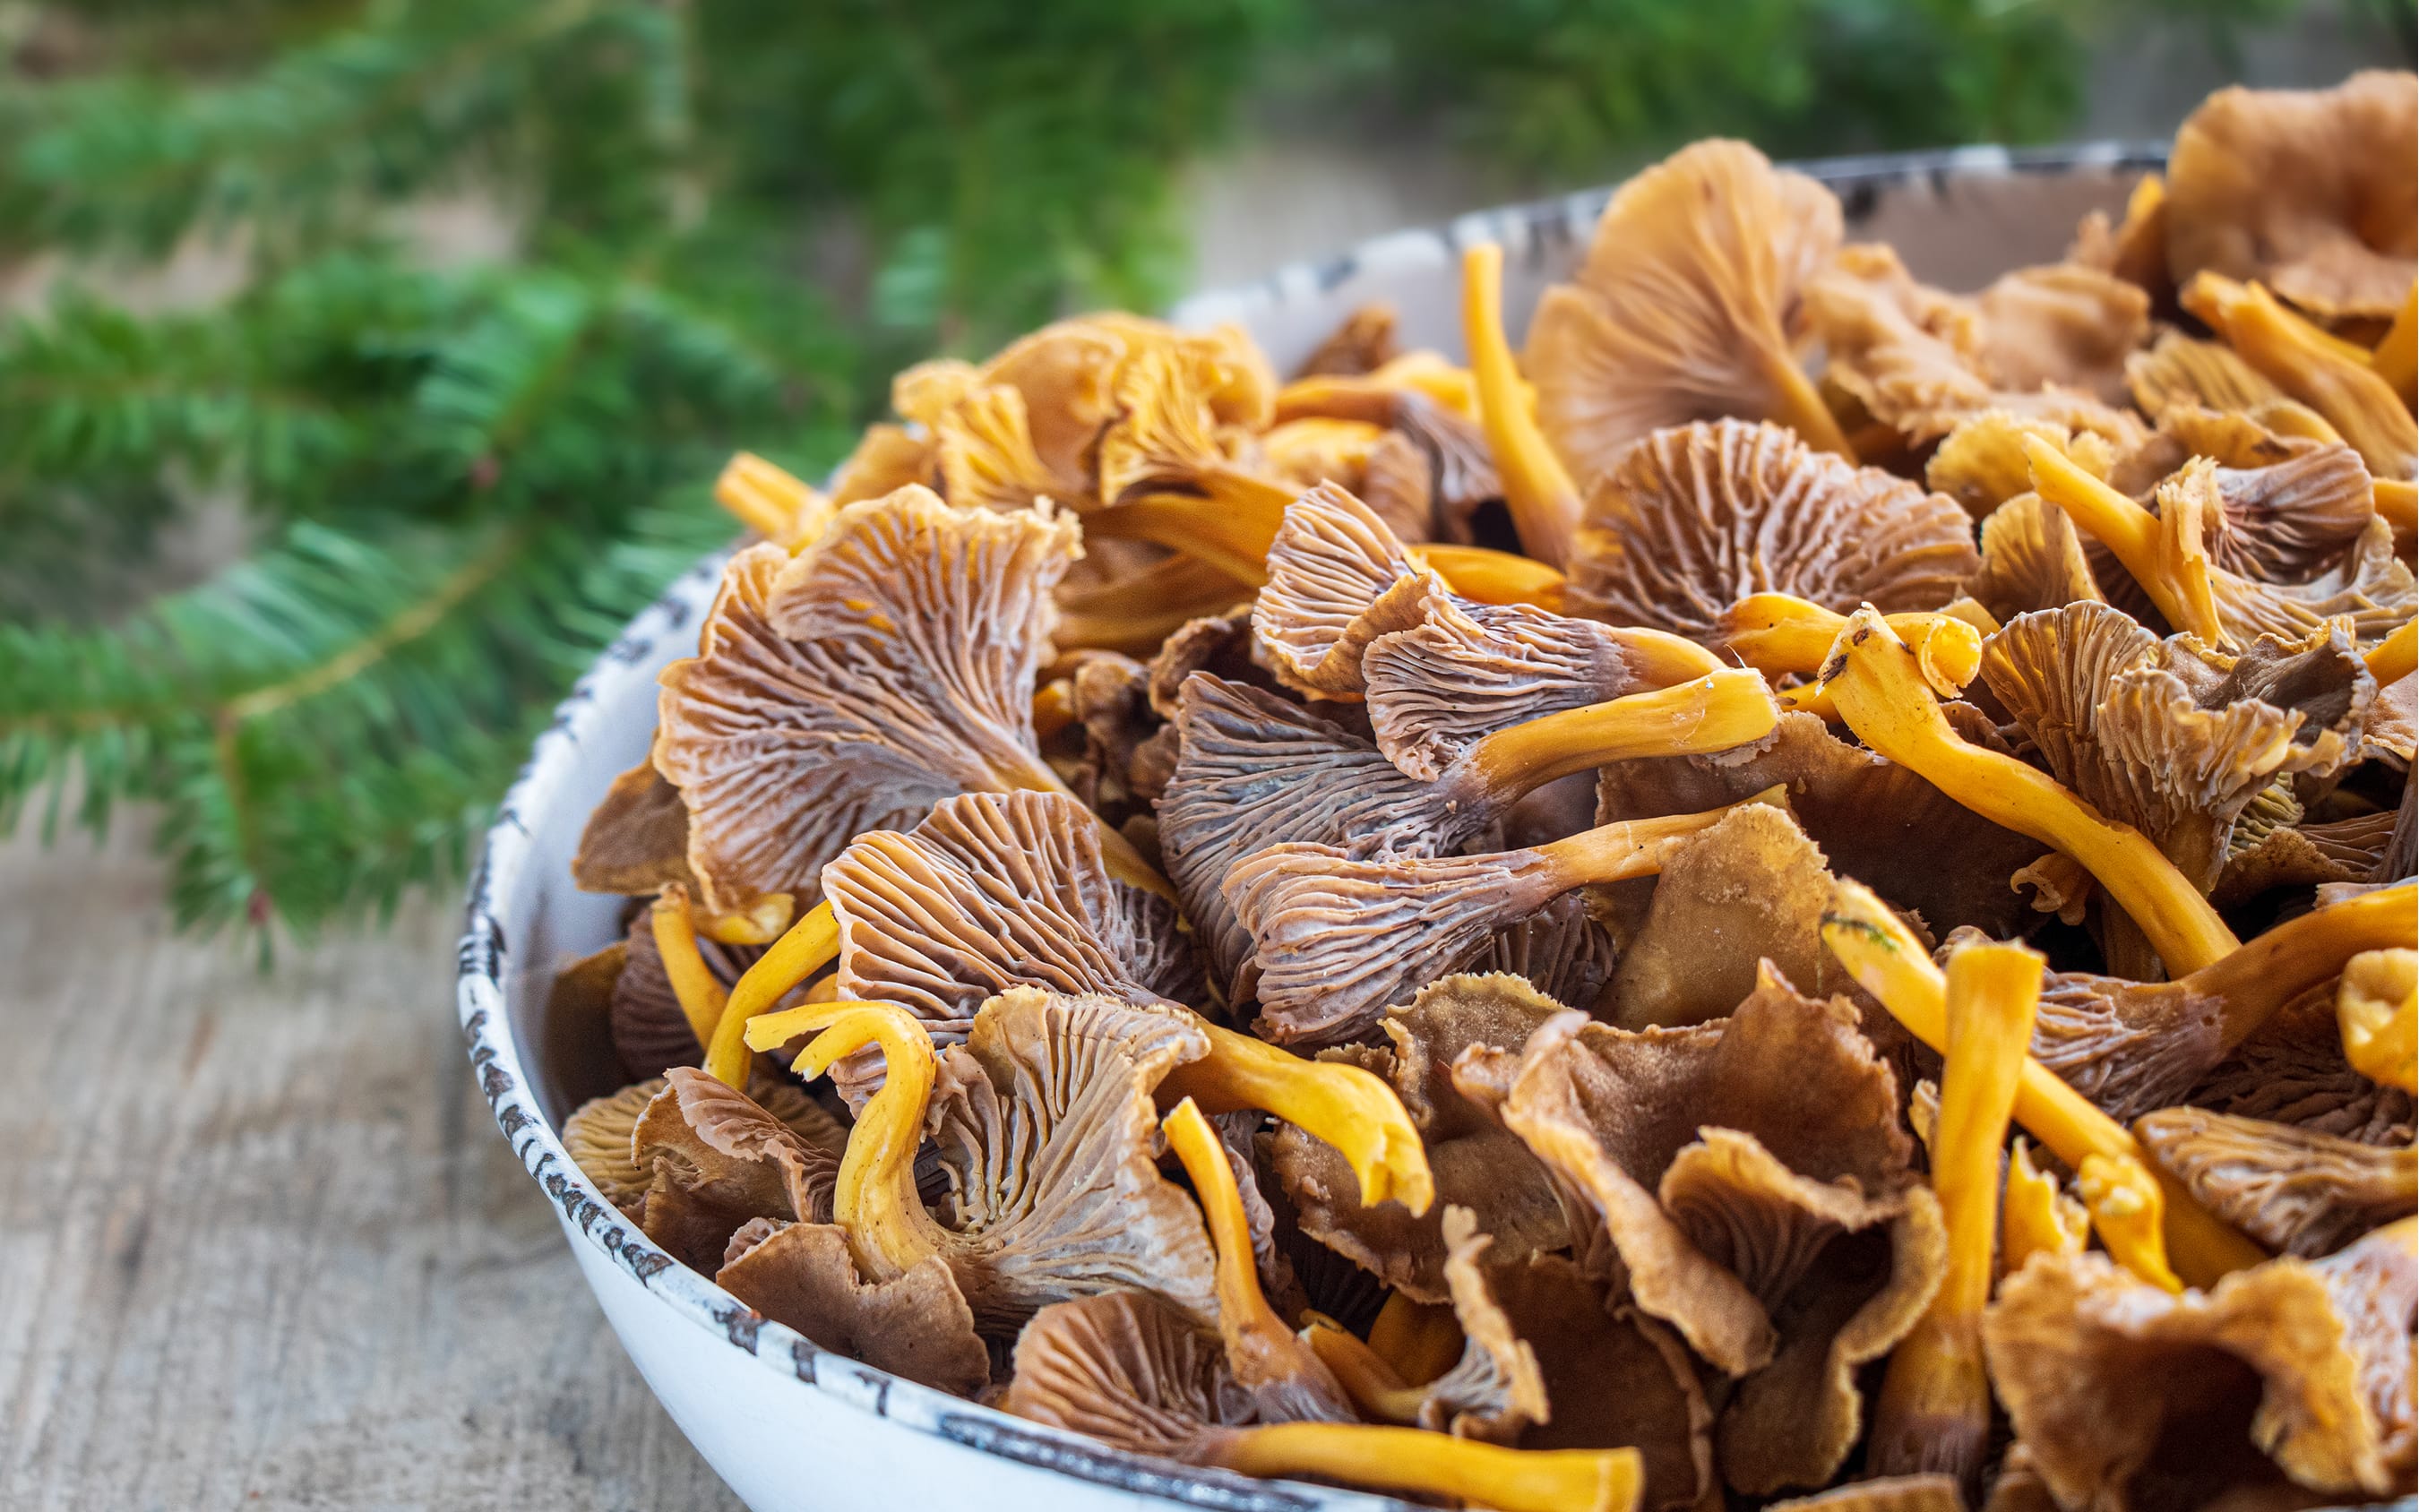 Yellowfoot Chanterelles - Craterellus tubaeformis | Hasselback Potatoes in Garlic Sauce with Mushrooms  – Recipe by FUNGIWOMAN